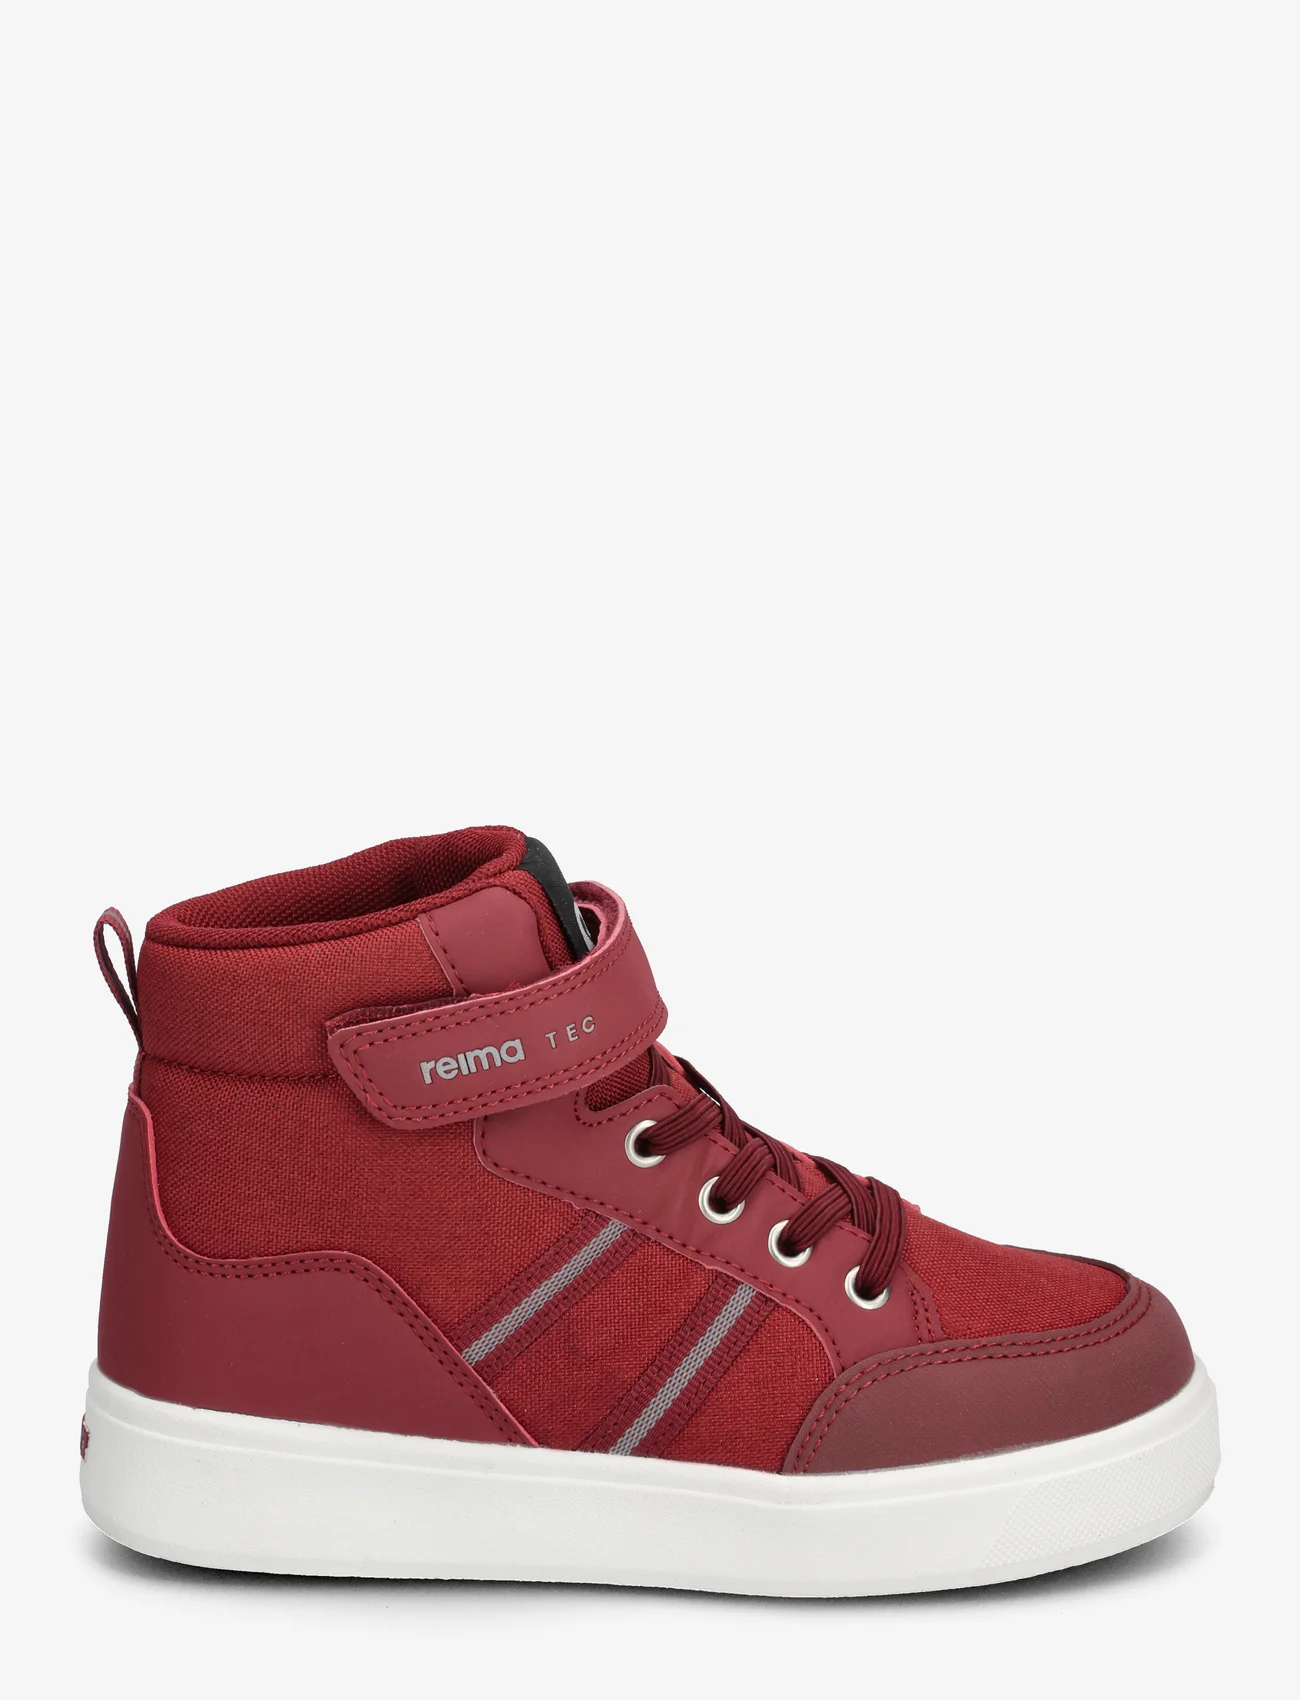 Reima - Reimatec sneakers, Skeitti - high-top sneakers - jam red - 1